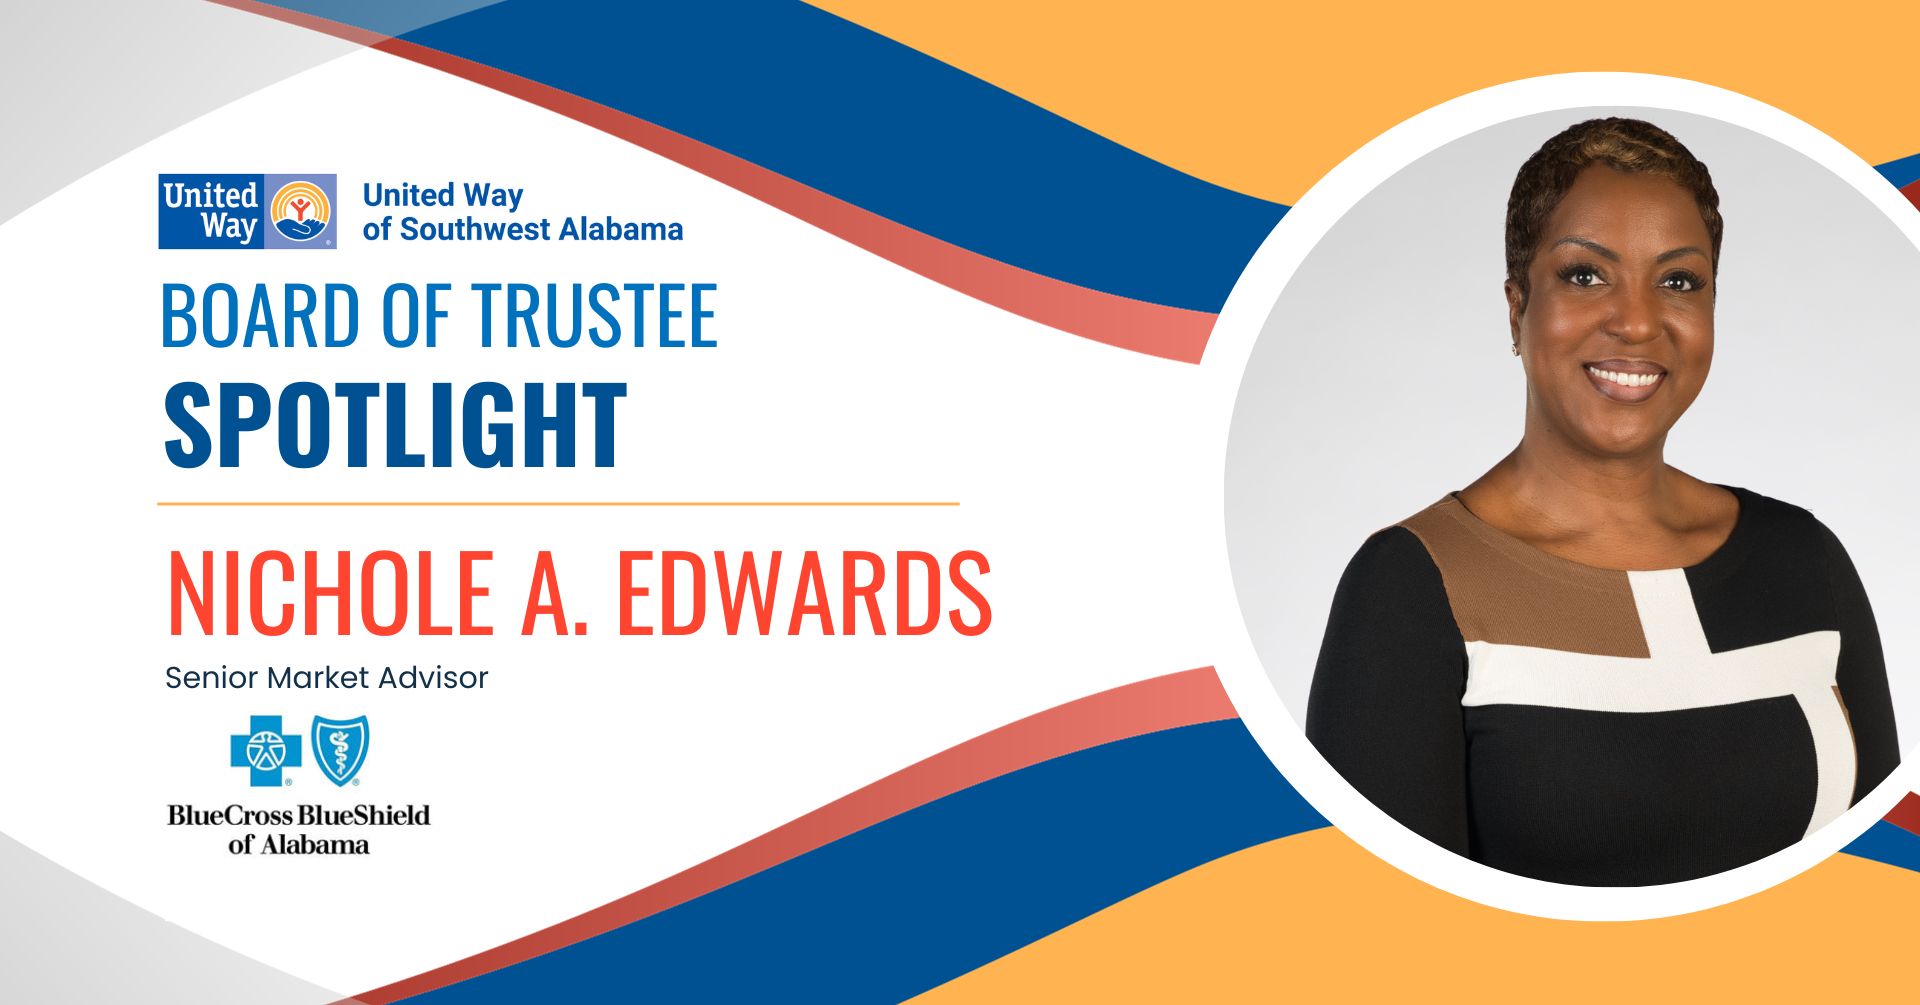 United Way Board of Trustee Spotlight - Nichole A. Edwards